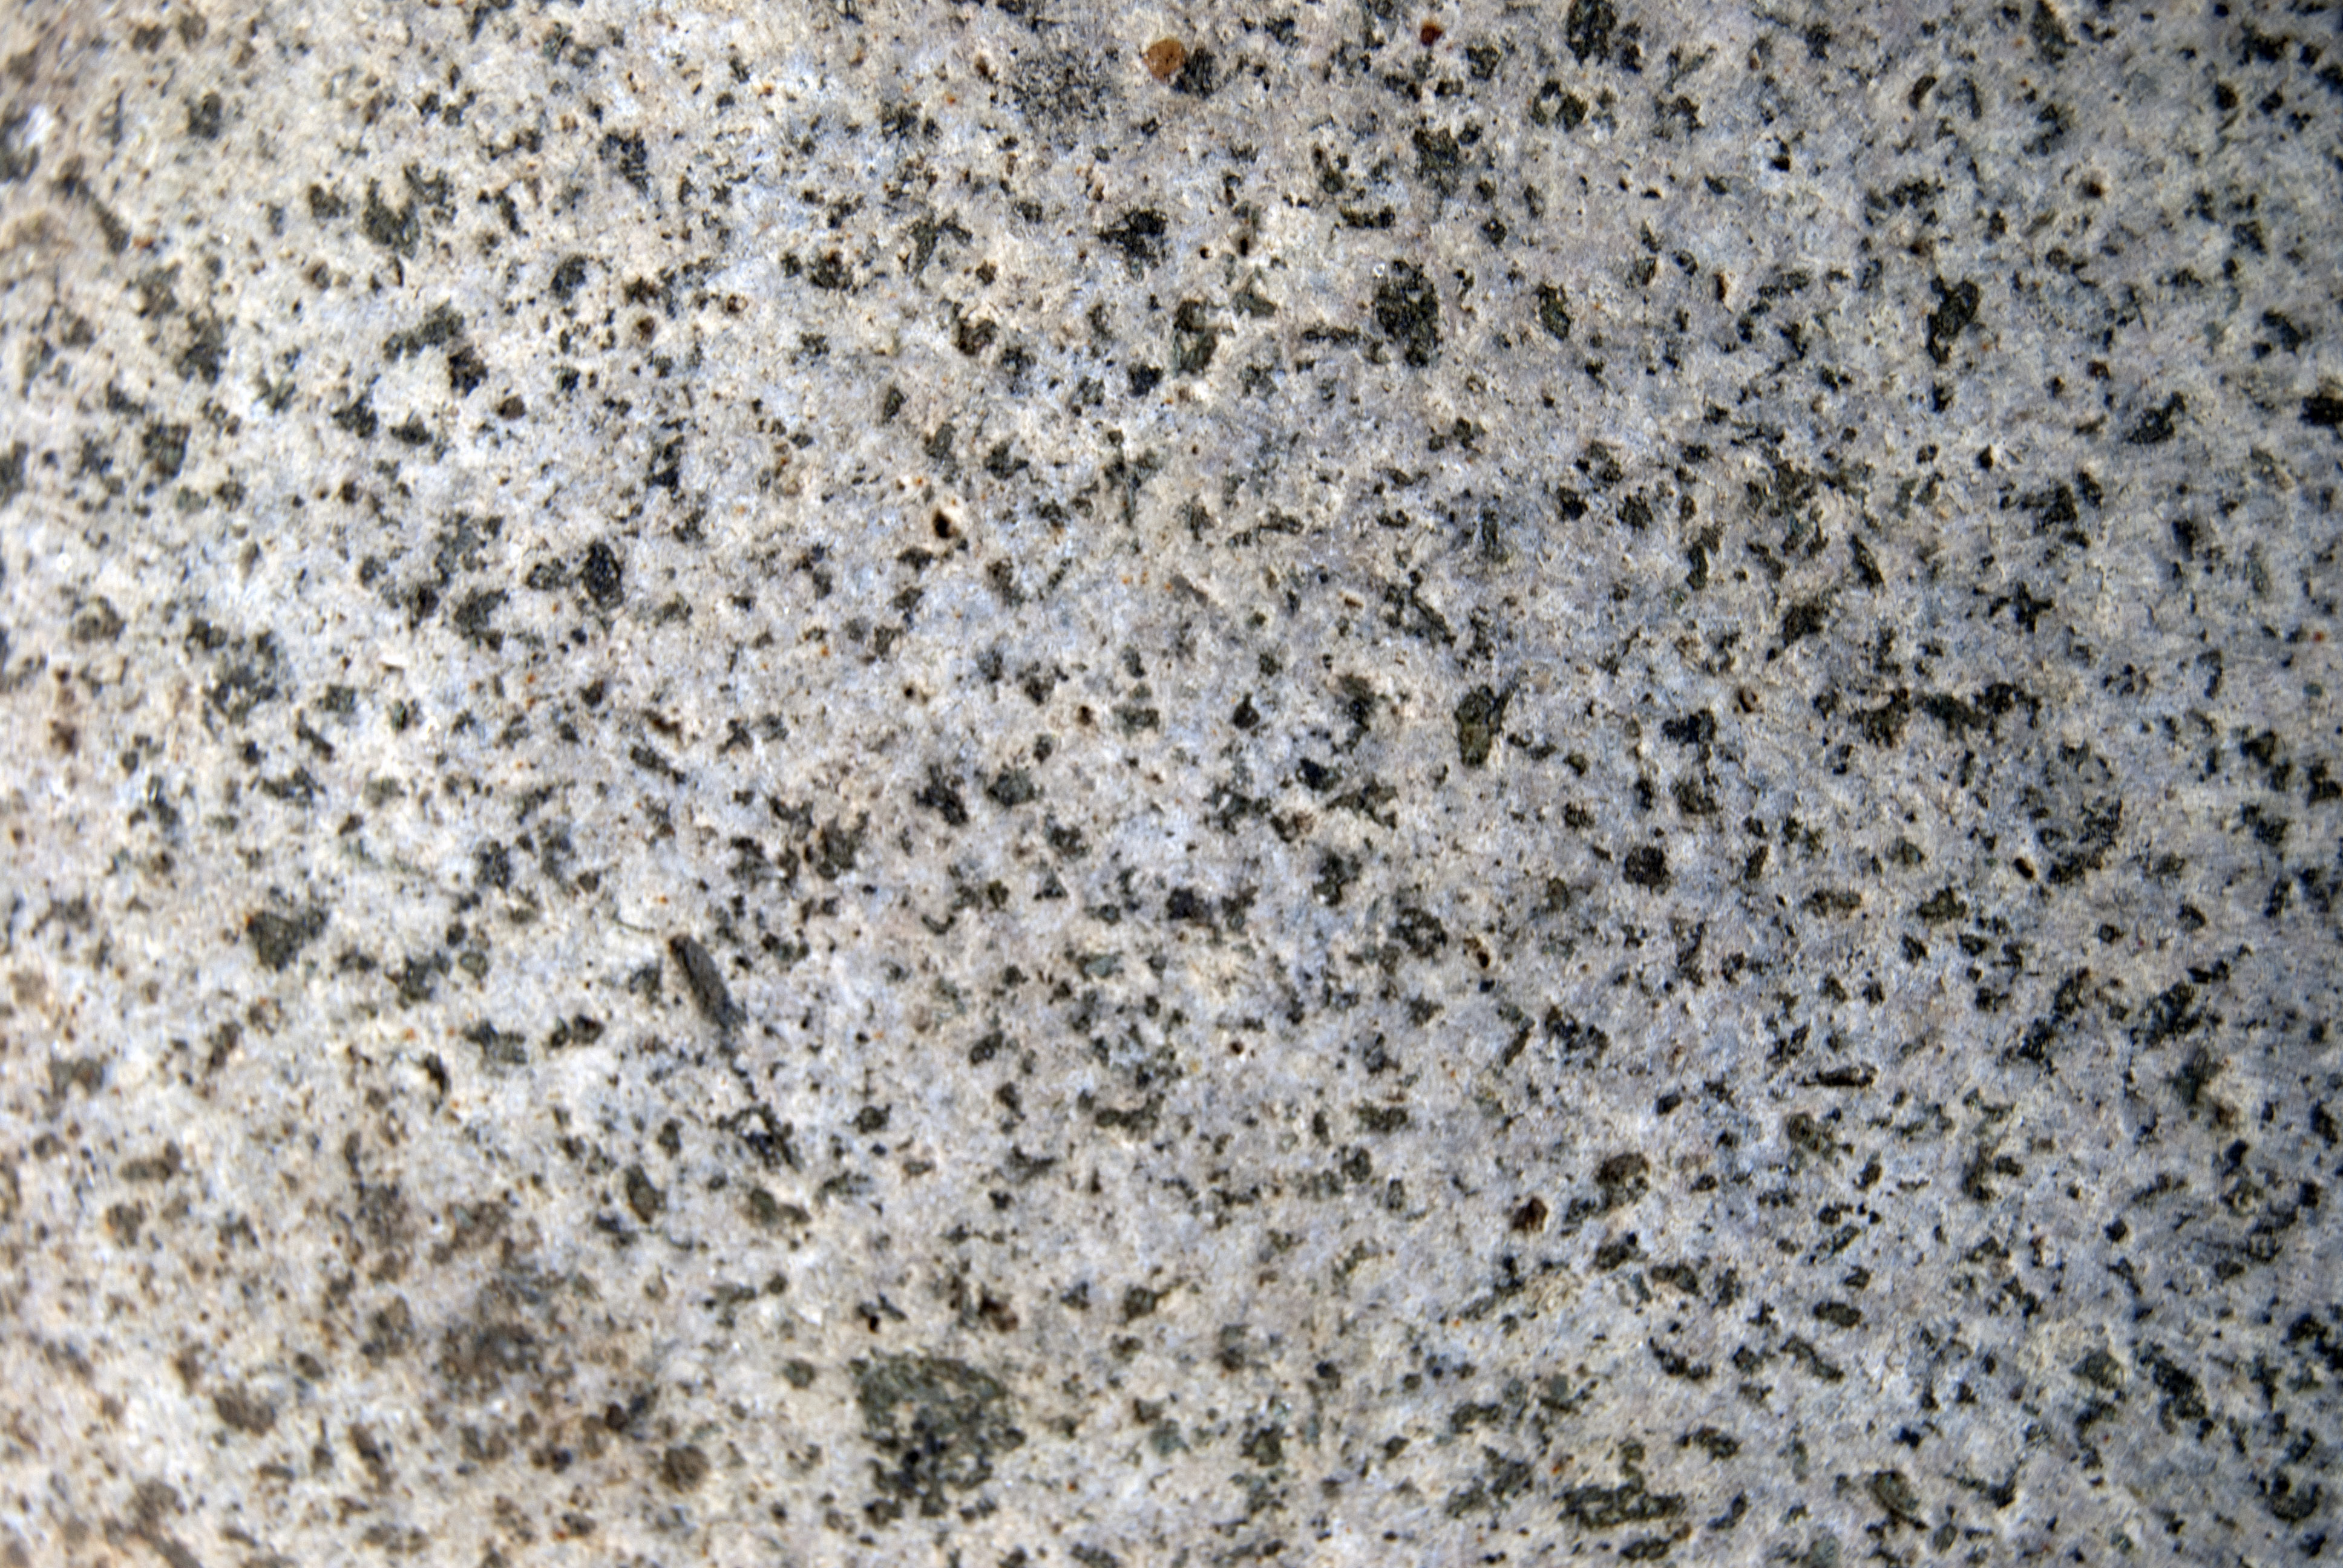 Rock surface texture photo